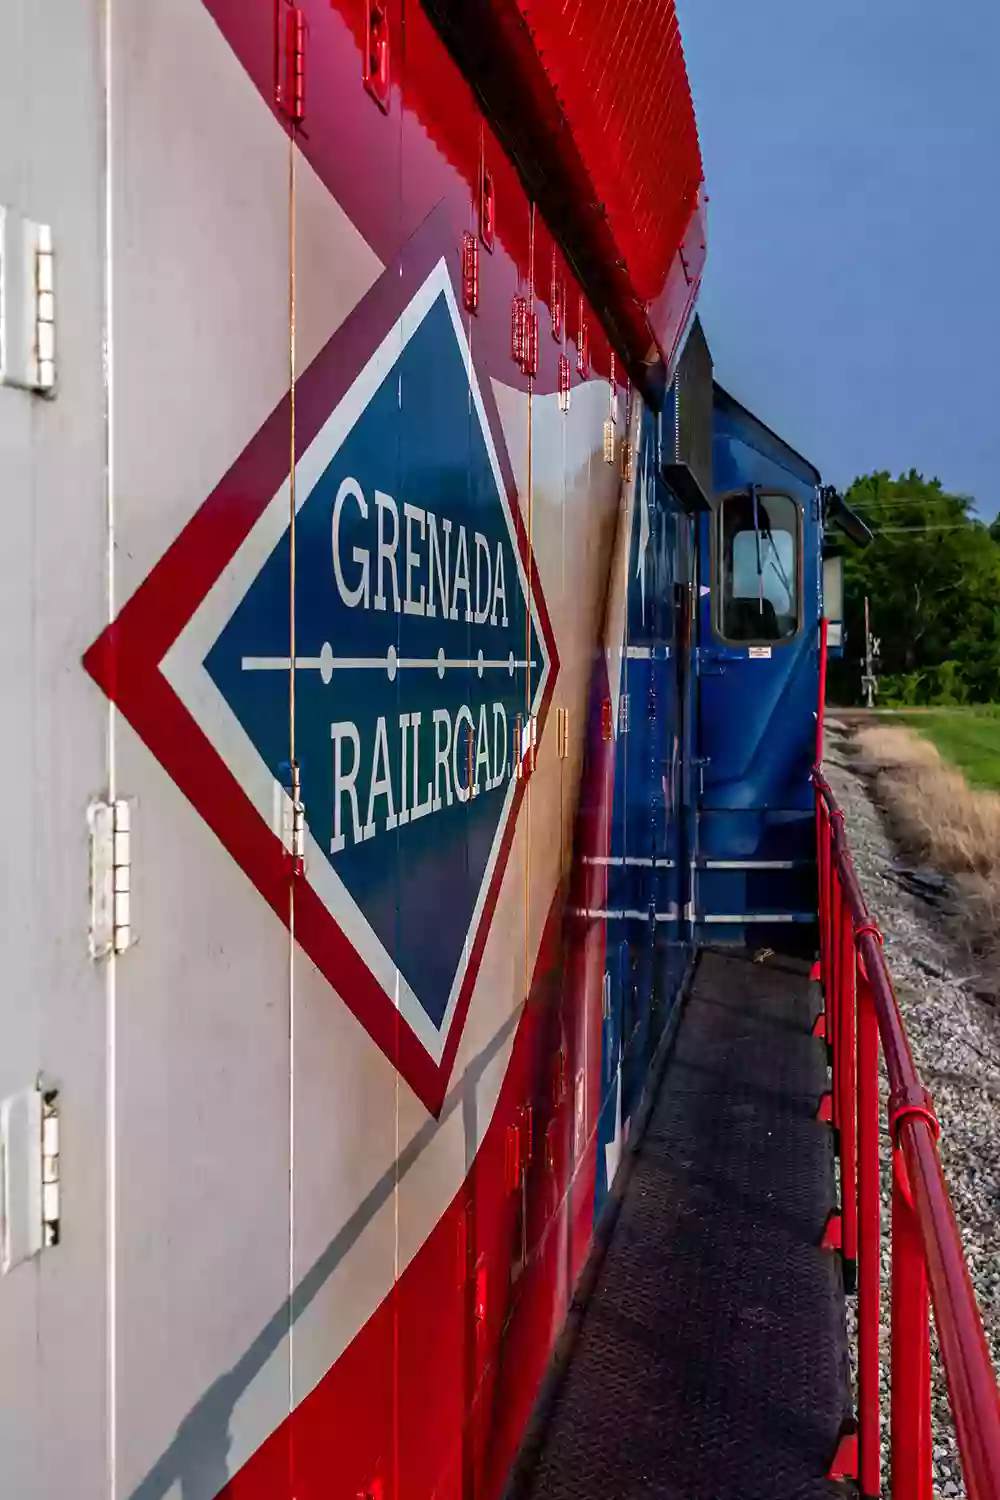 Grenada Railroad,LLC